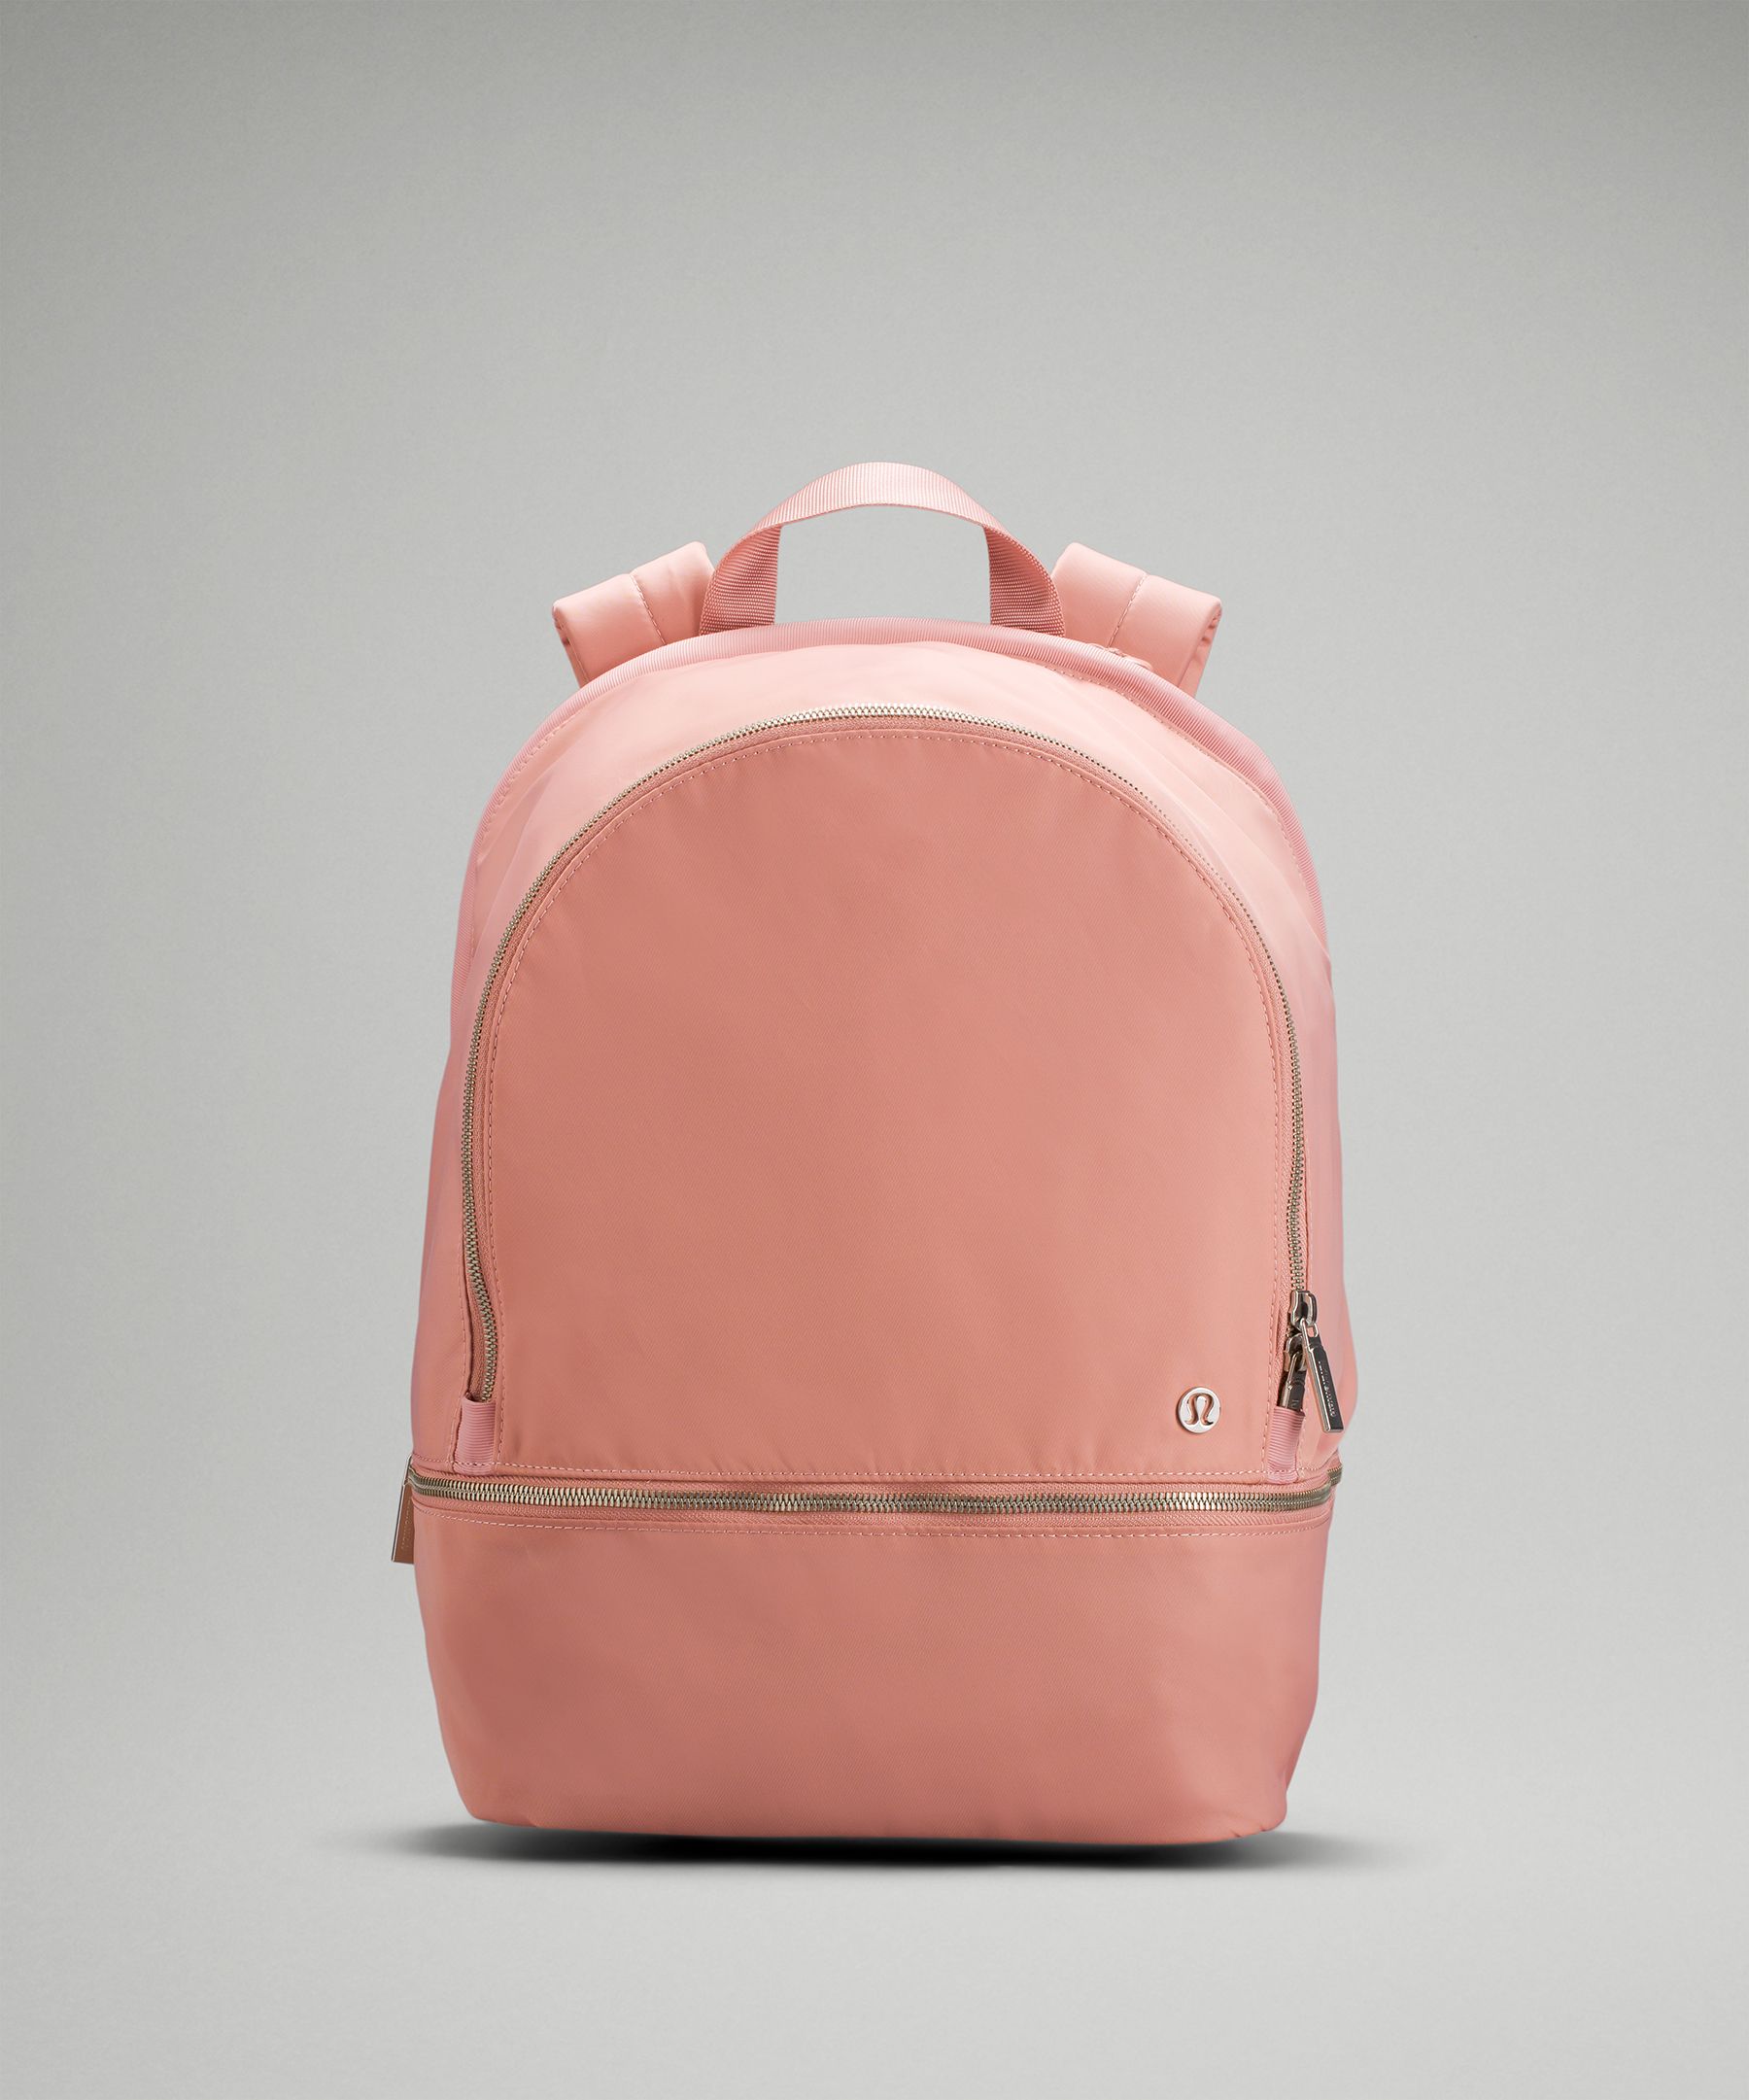 Lululemon backpack